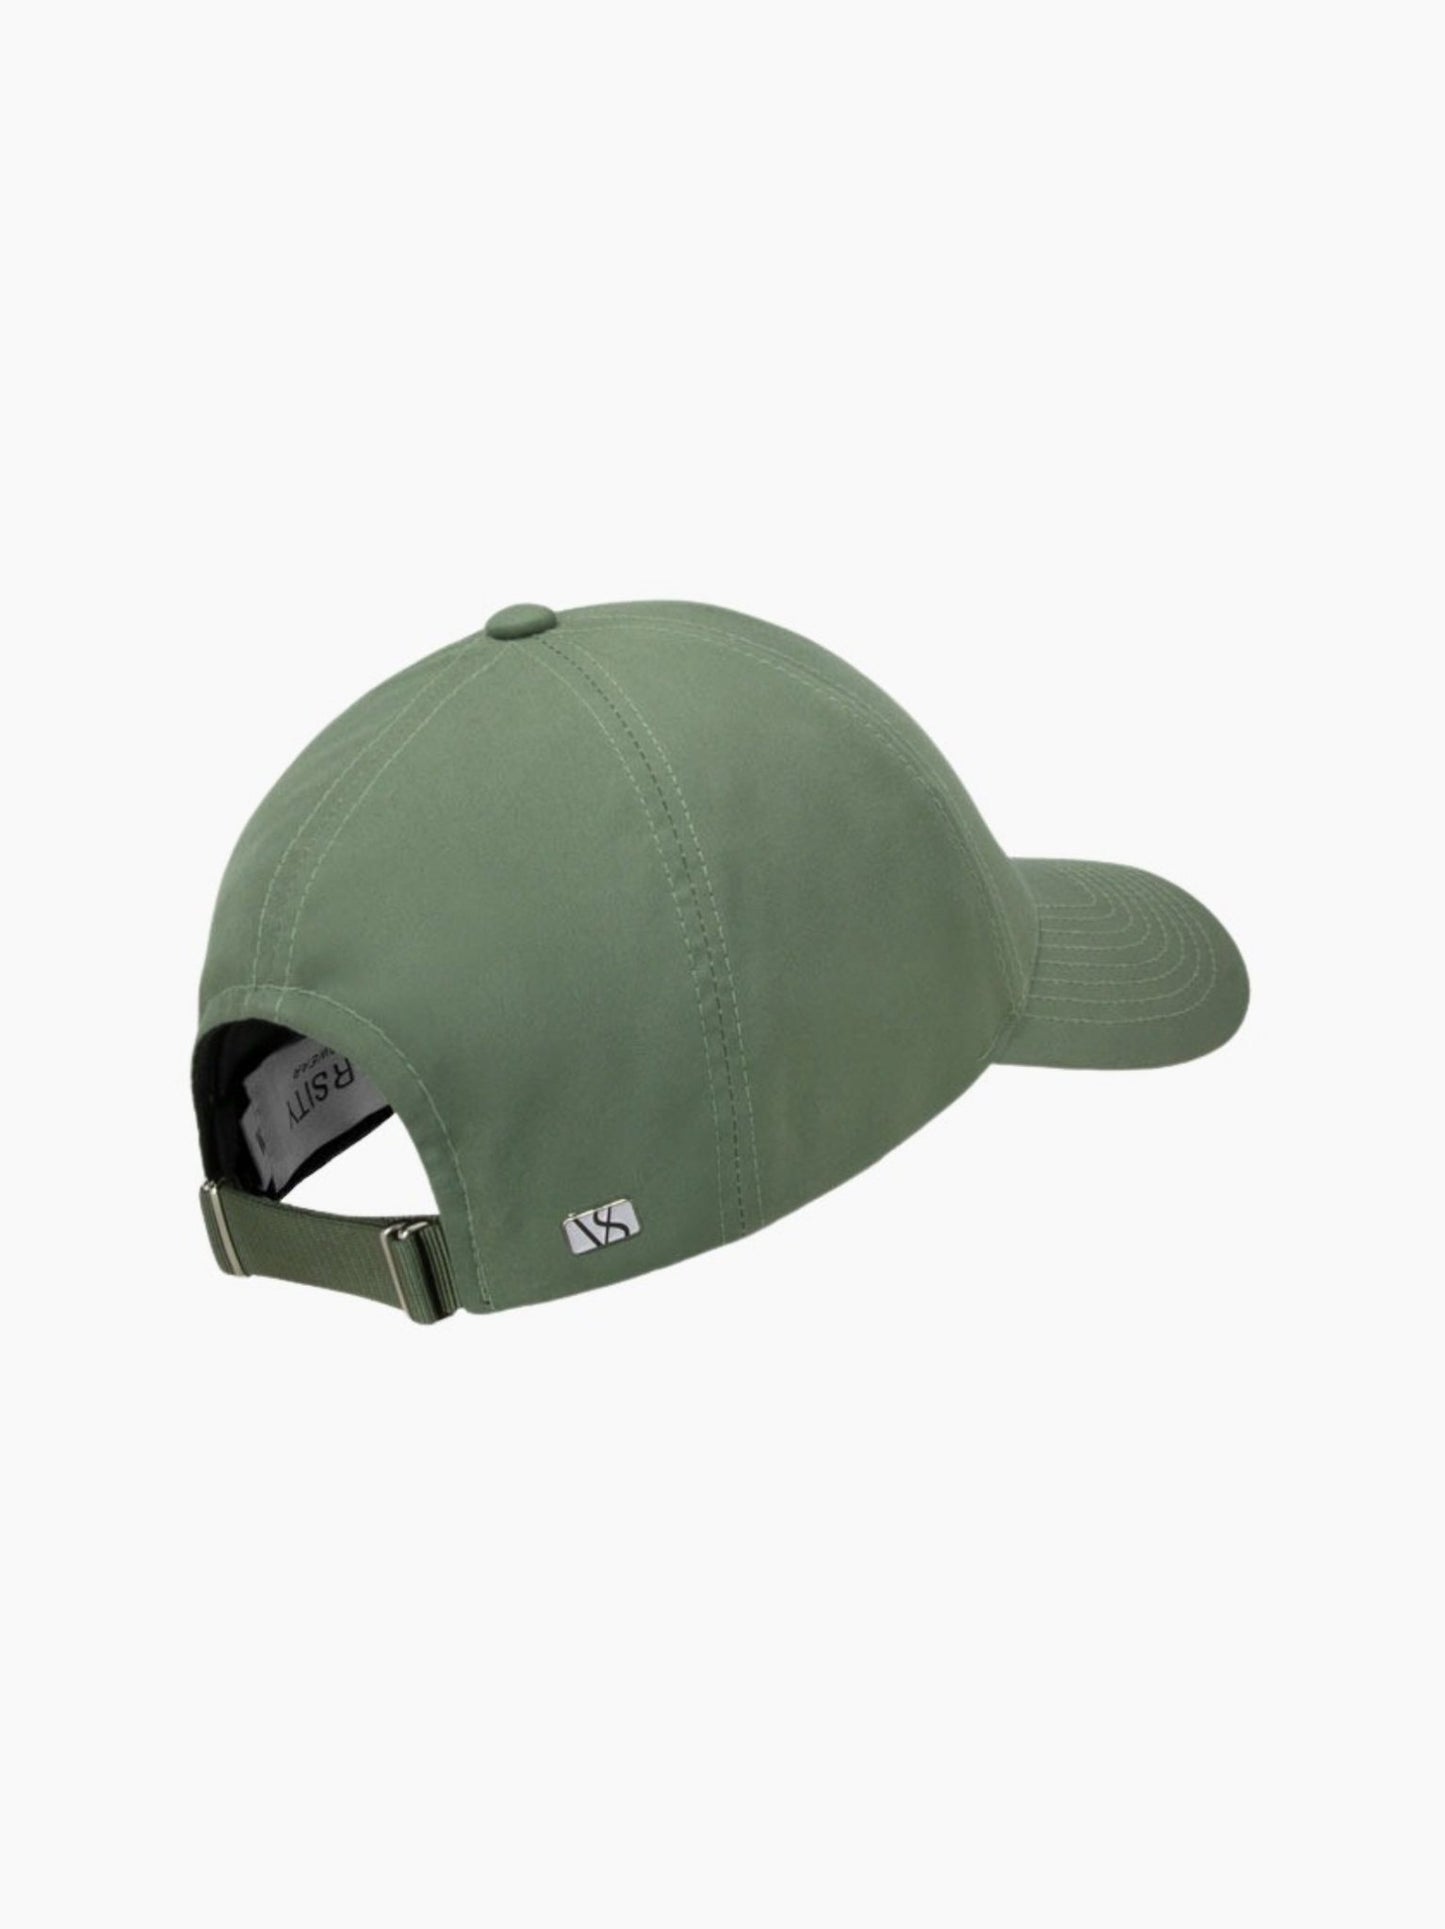 Sage Green Cotton Cap